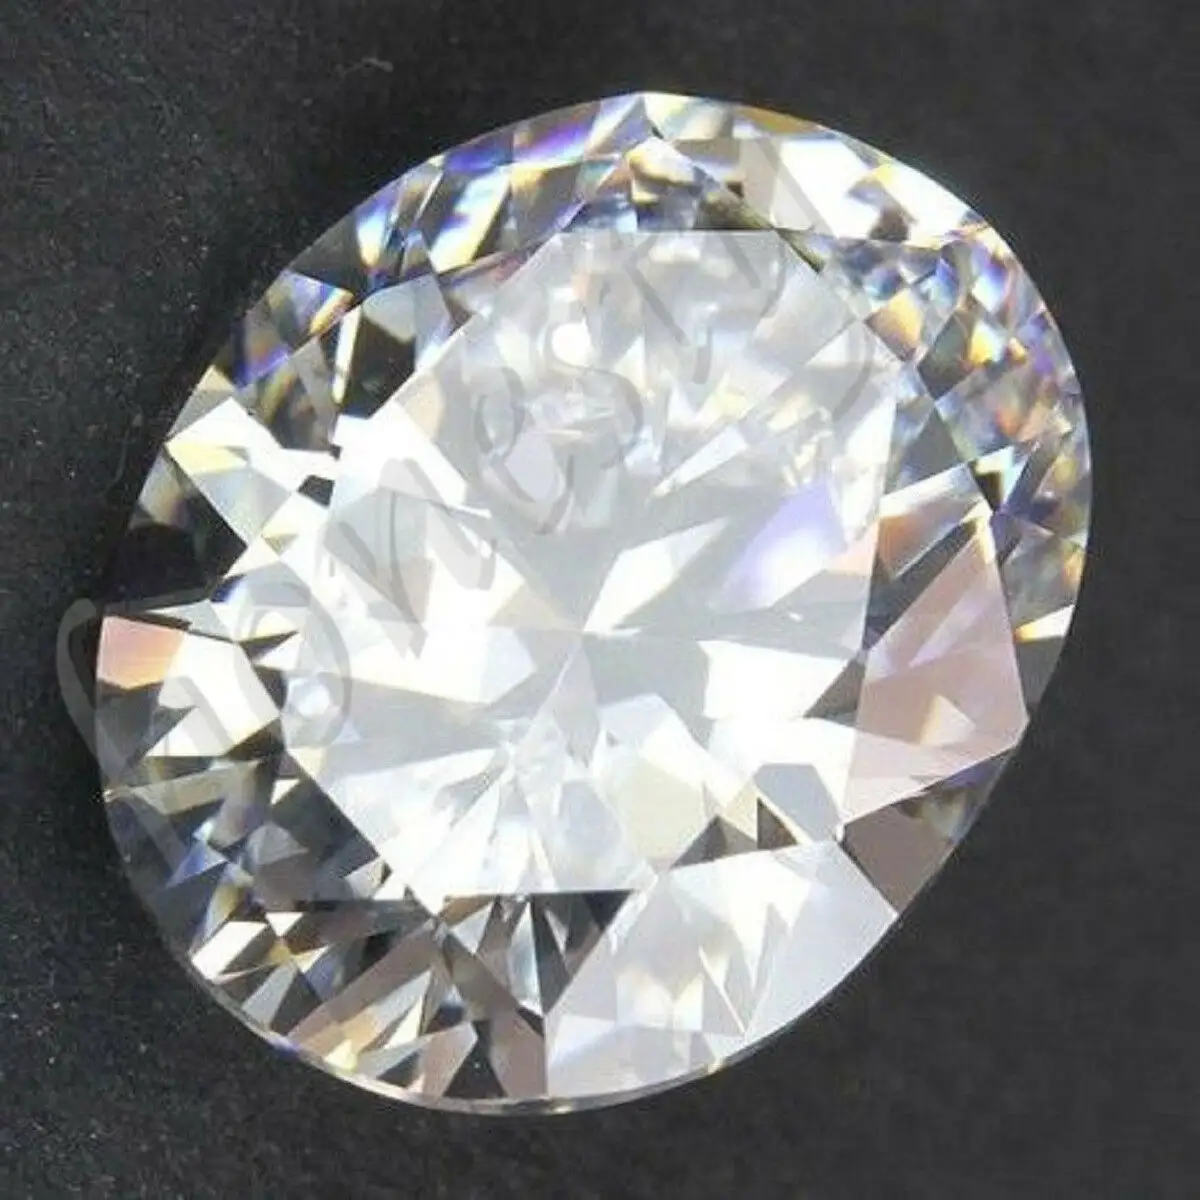 13X18MM zaffiro bianco bella forma ovale brillante gemma sciolta gemma